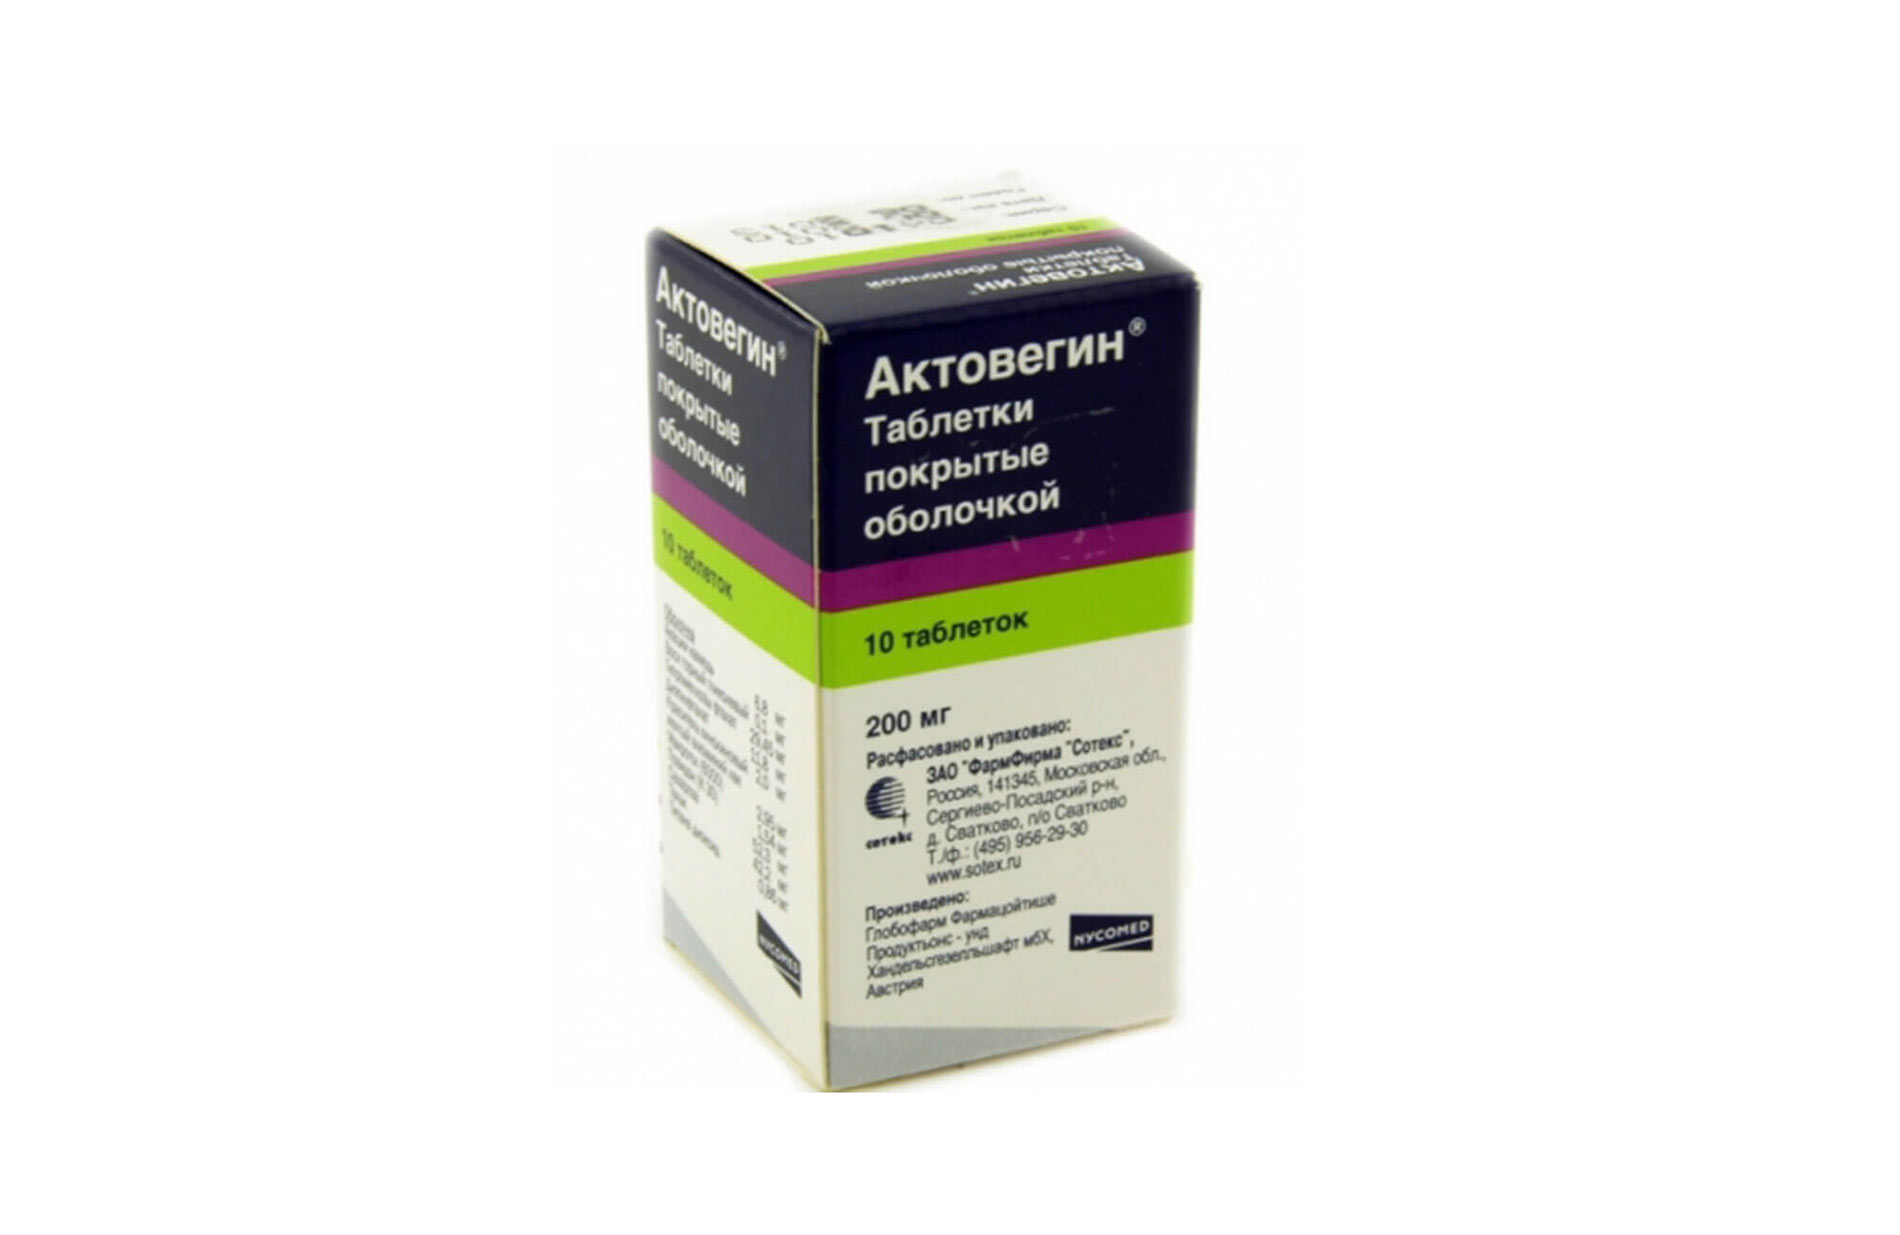 actovegin pills for children